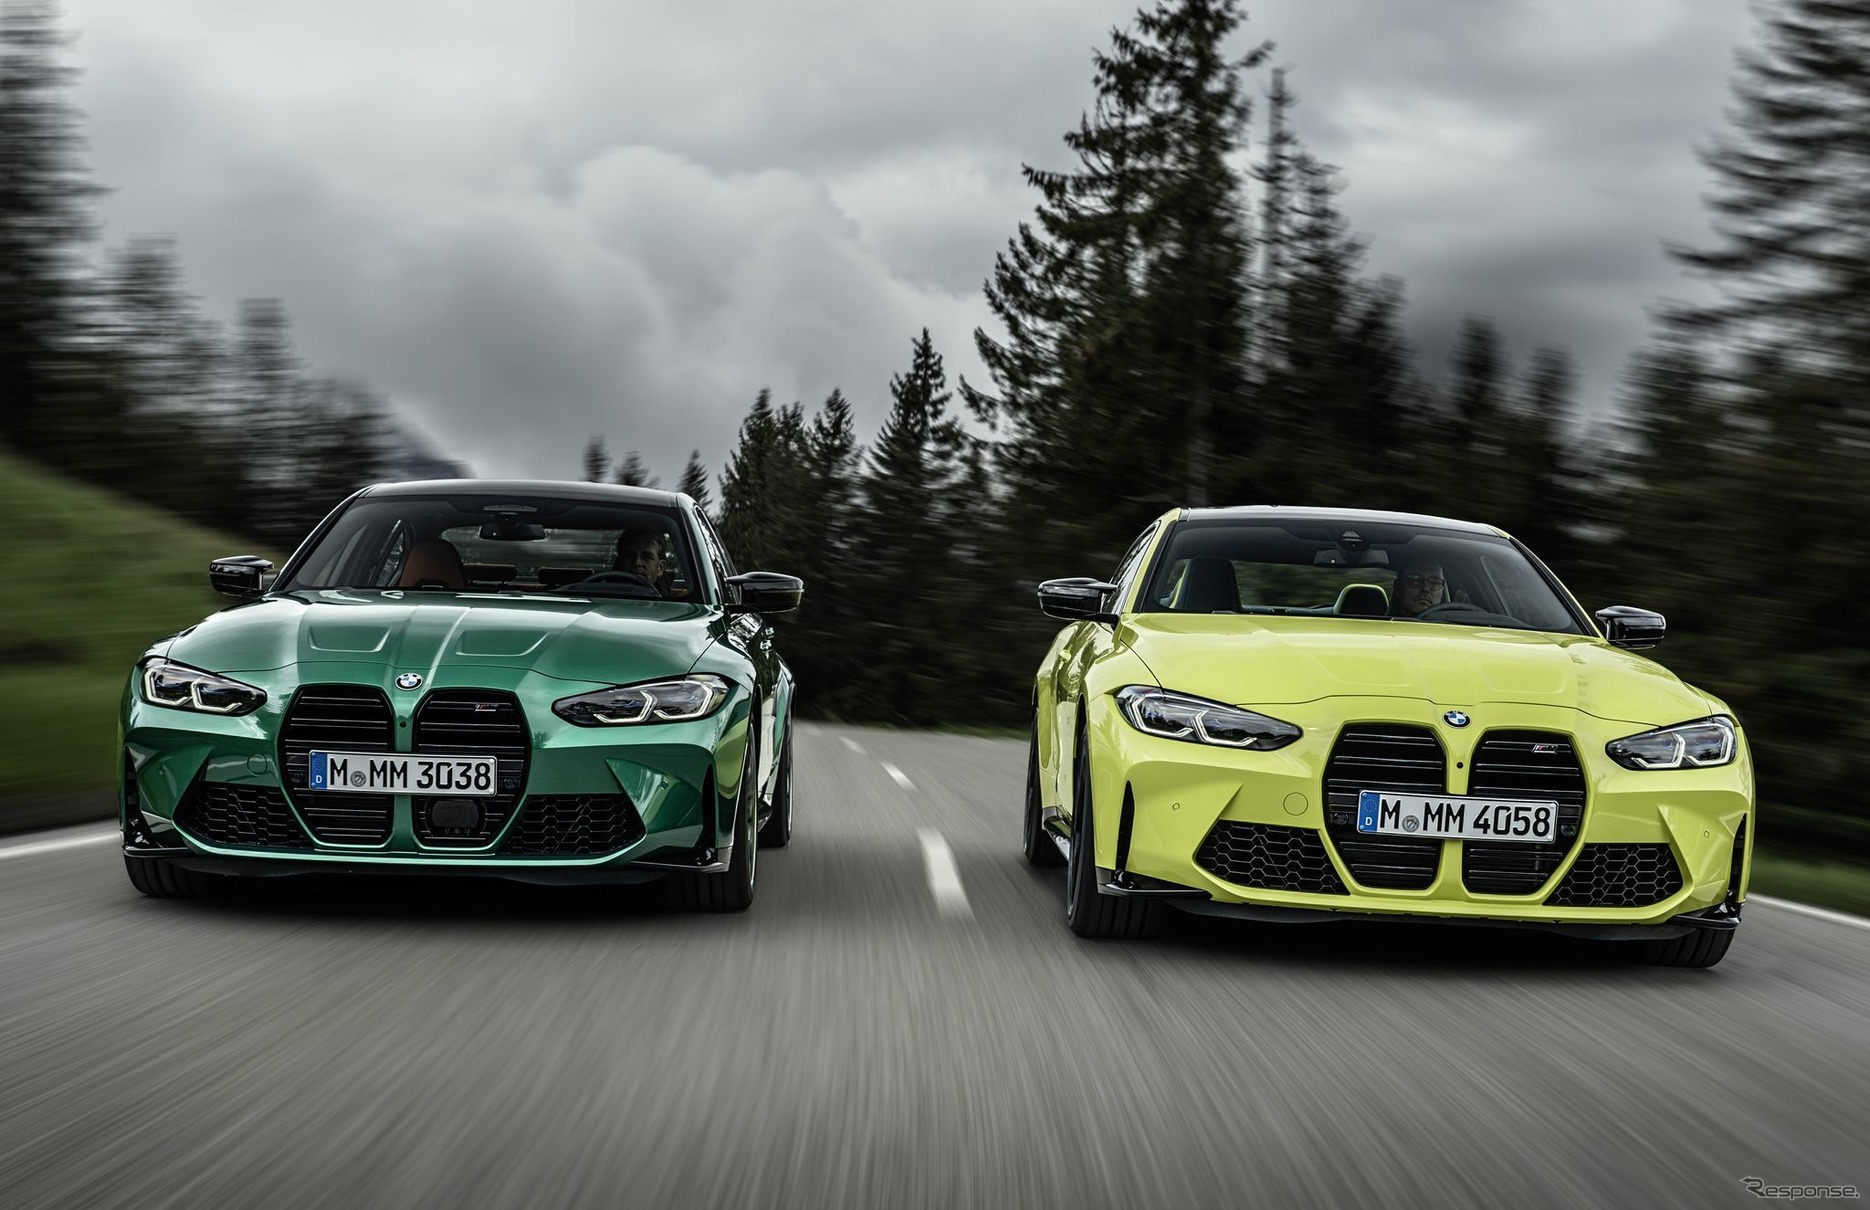 BMW M3 セダン 新型と M4 クーペ 新型